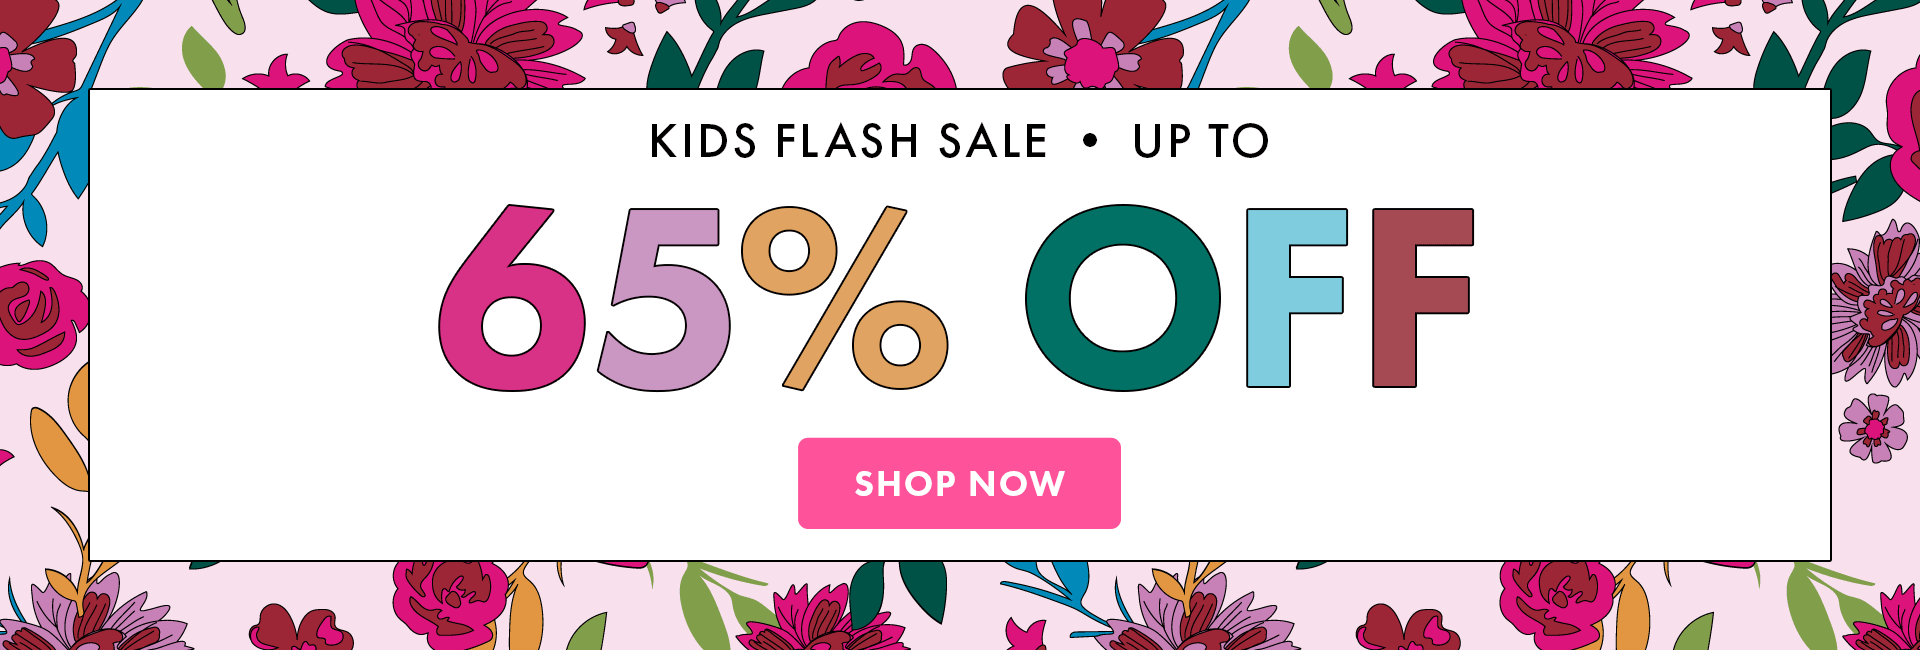 https://images.marleylilly.com/catalog/homepage/550/01-02-kids-flash-sale-hero-desktop.gif